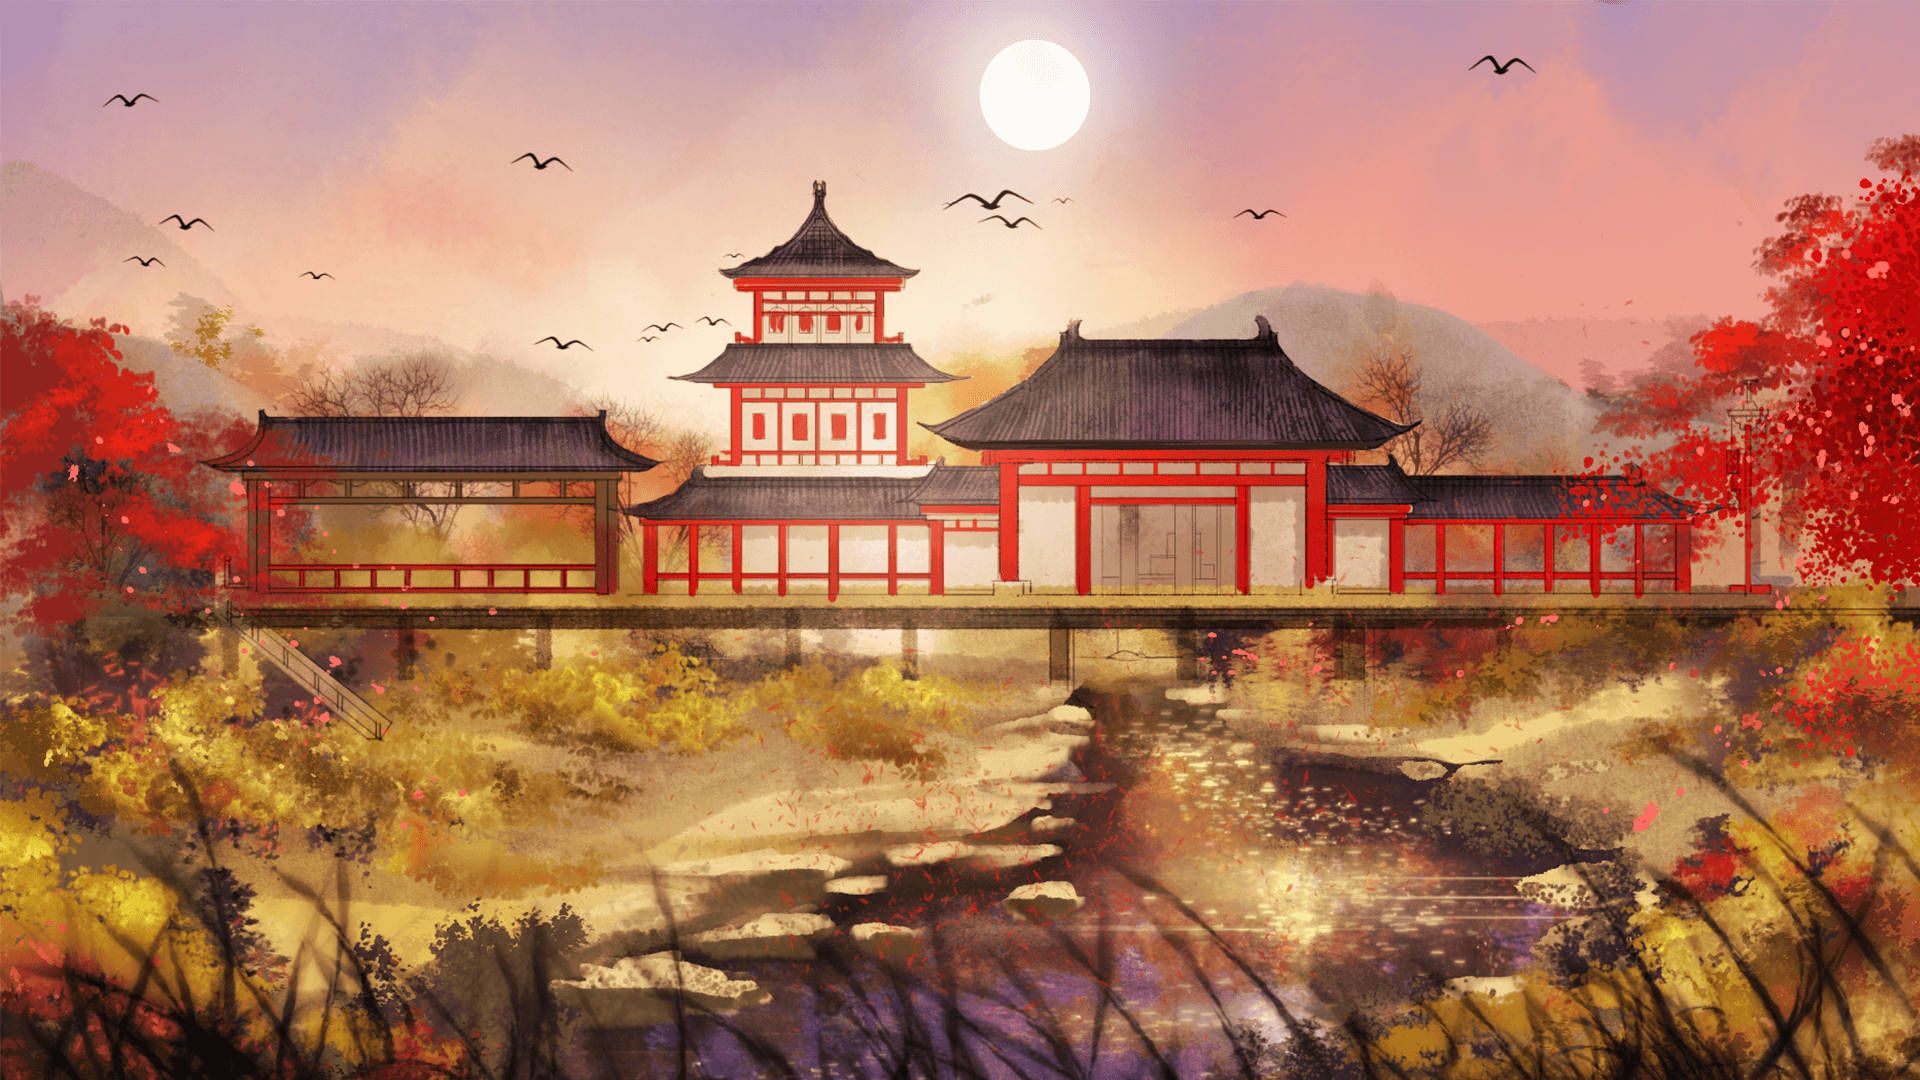  China Hintergrundbild 1920x1080. Download Chinese House Digital Artwork Wallpaper